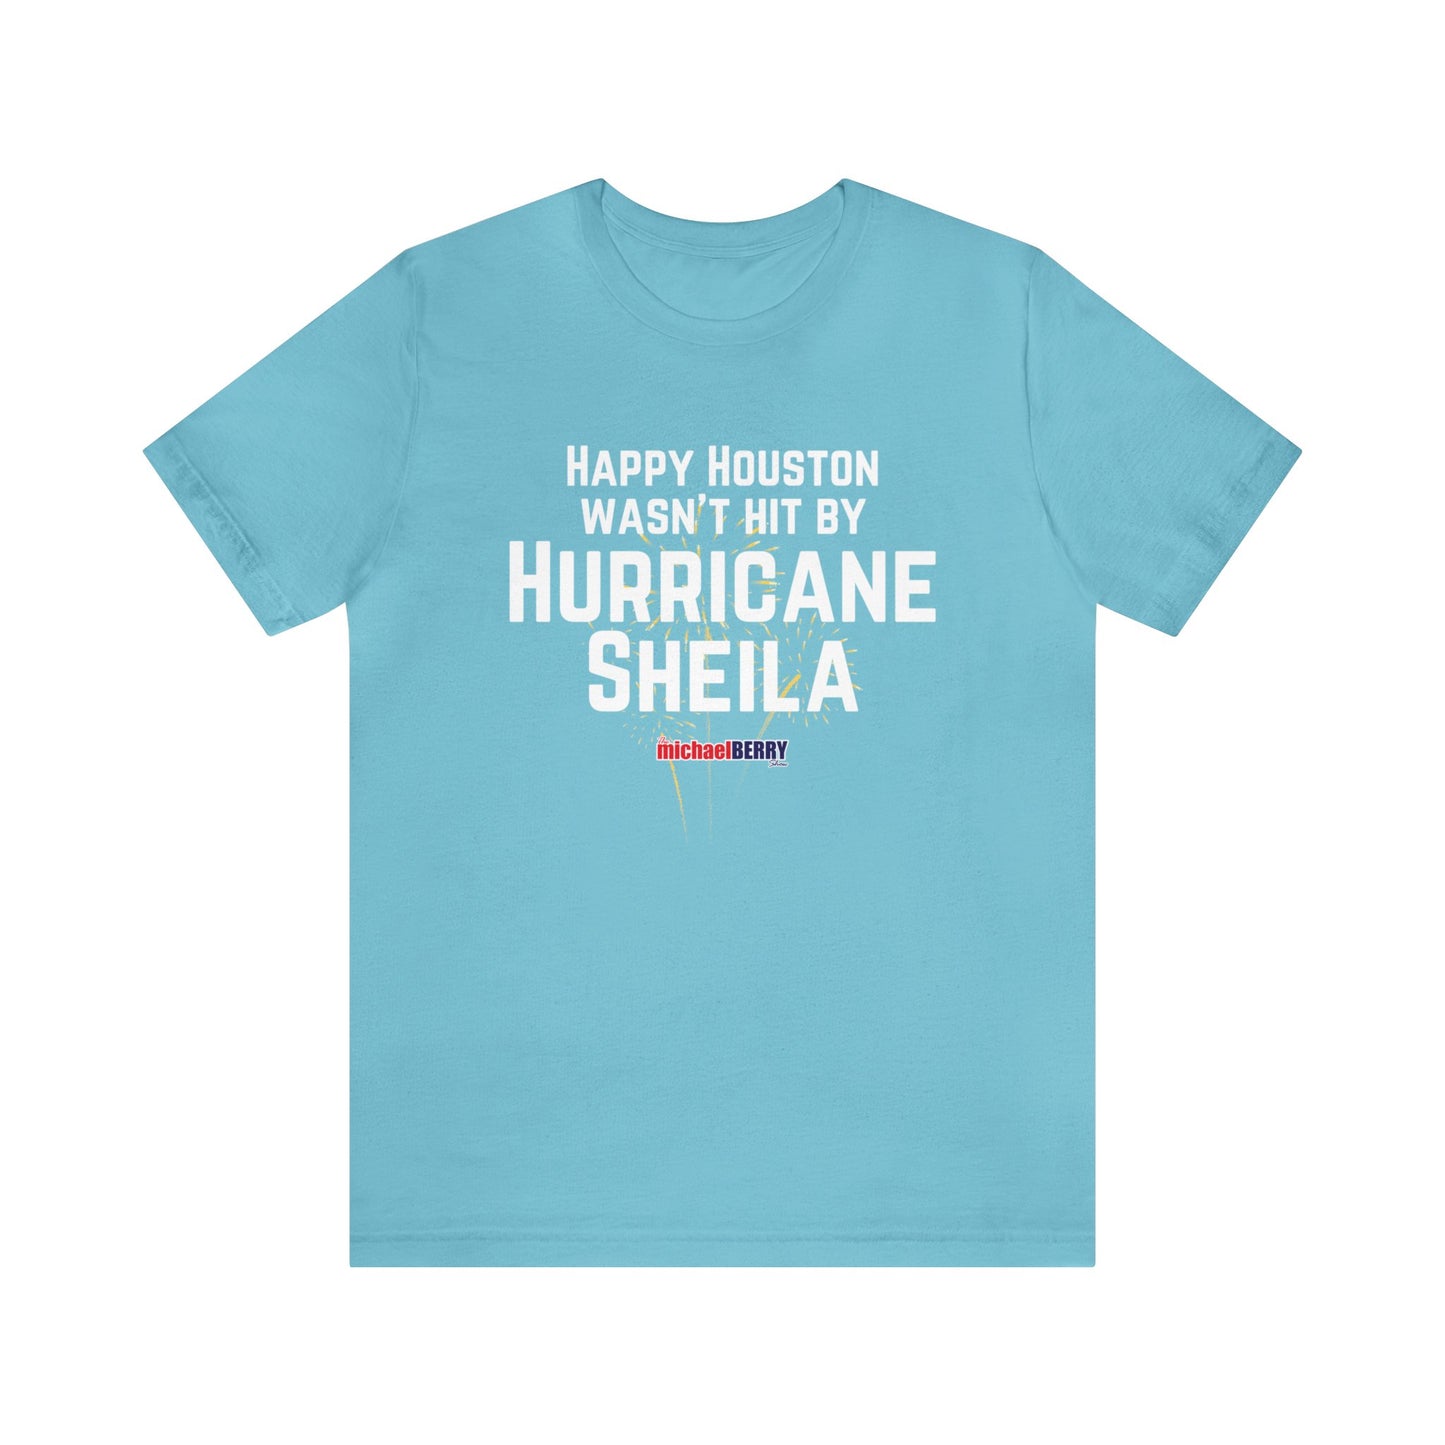 Happy Houston wasn't hit by Hurricane Sheila - Men's Short Sleeve Tee